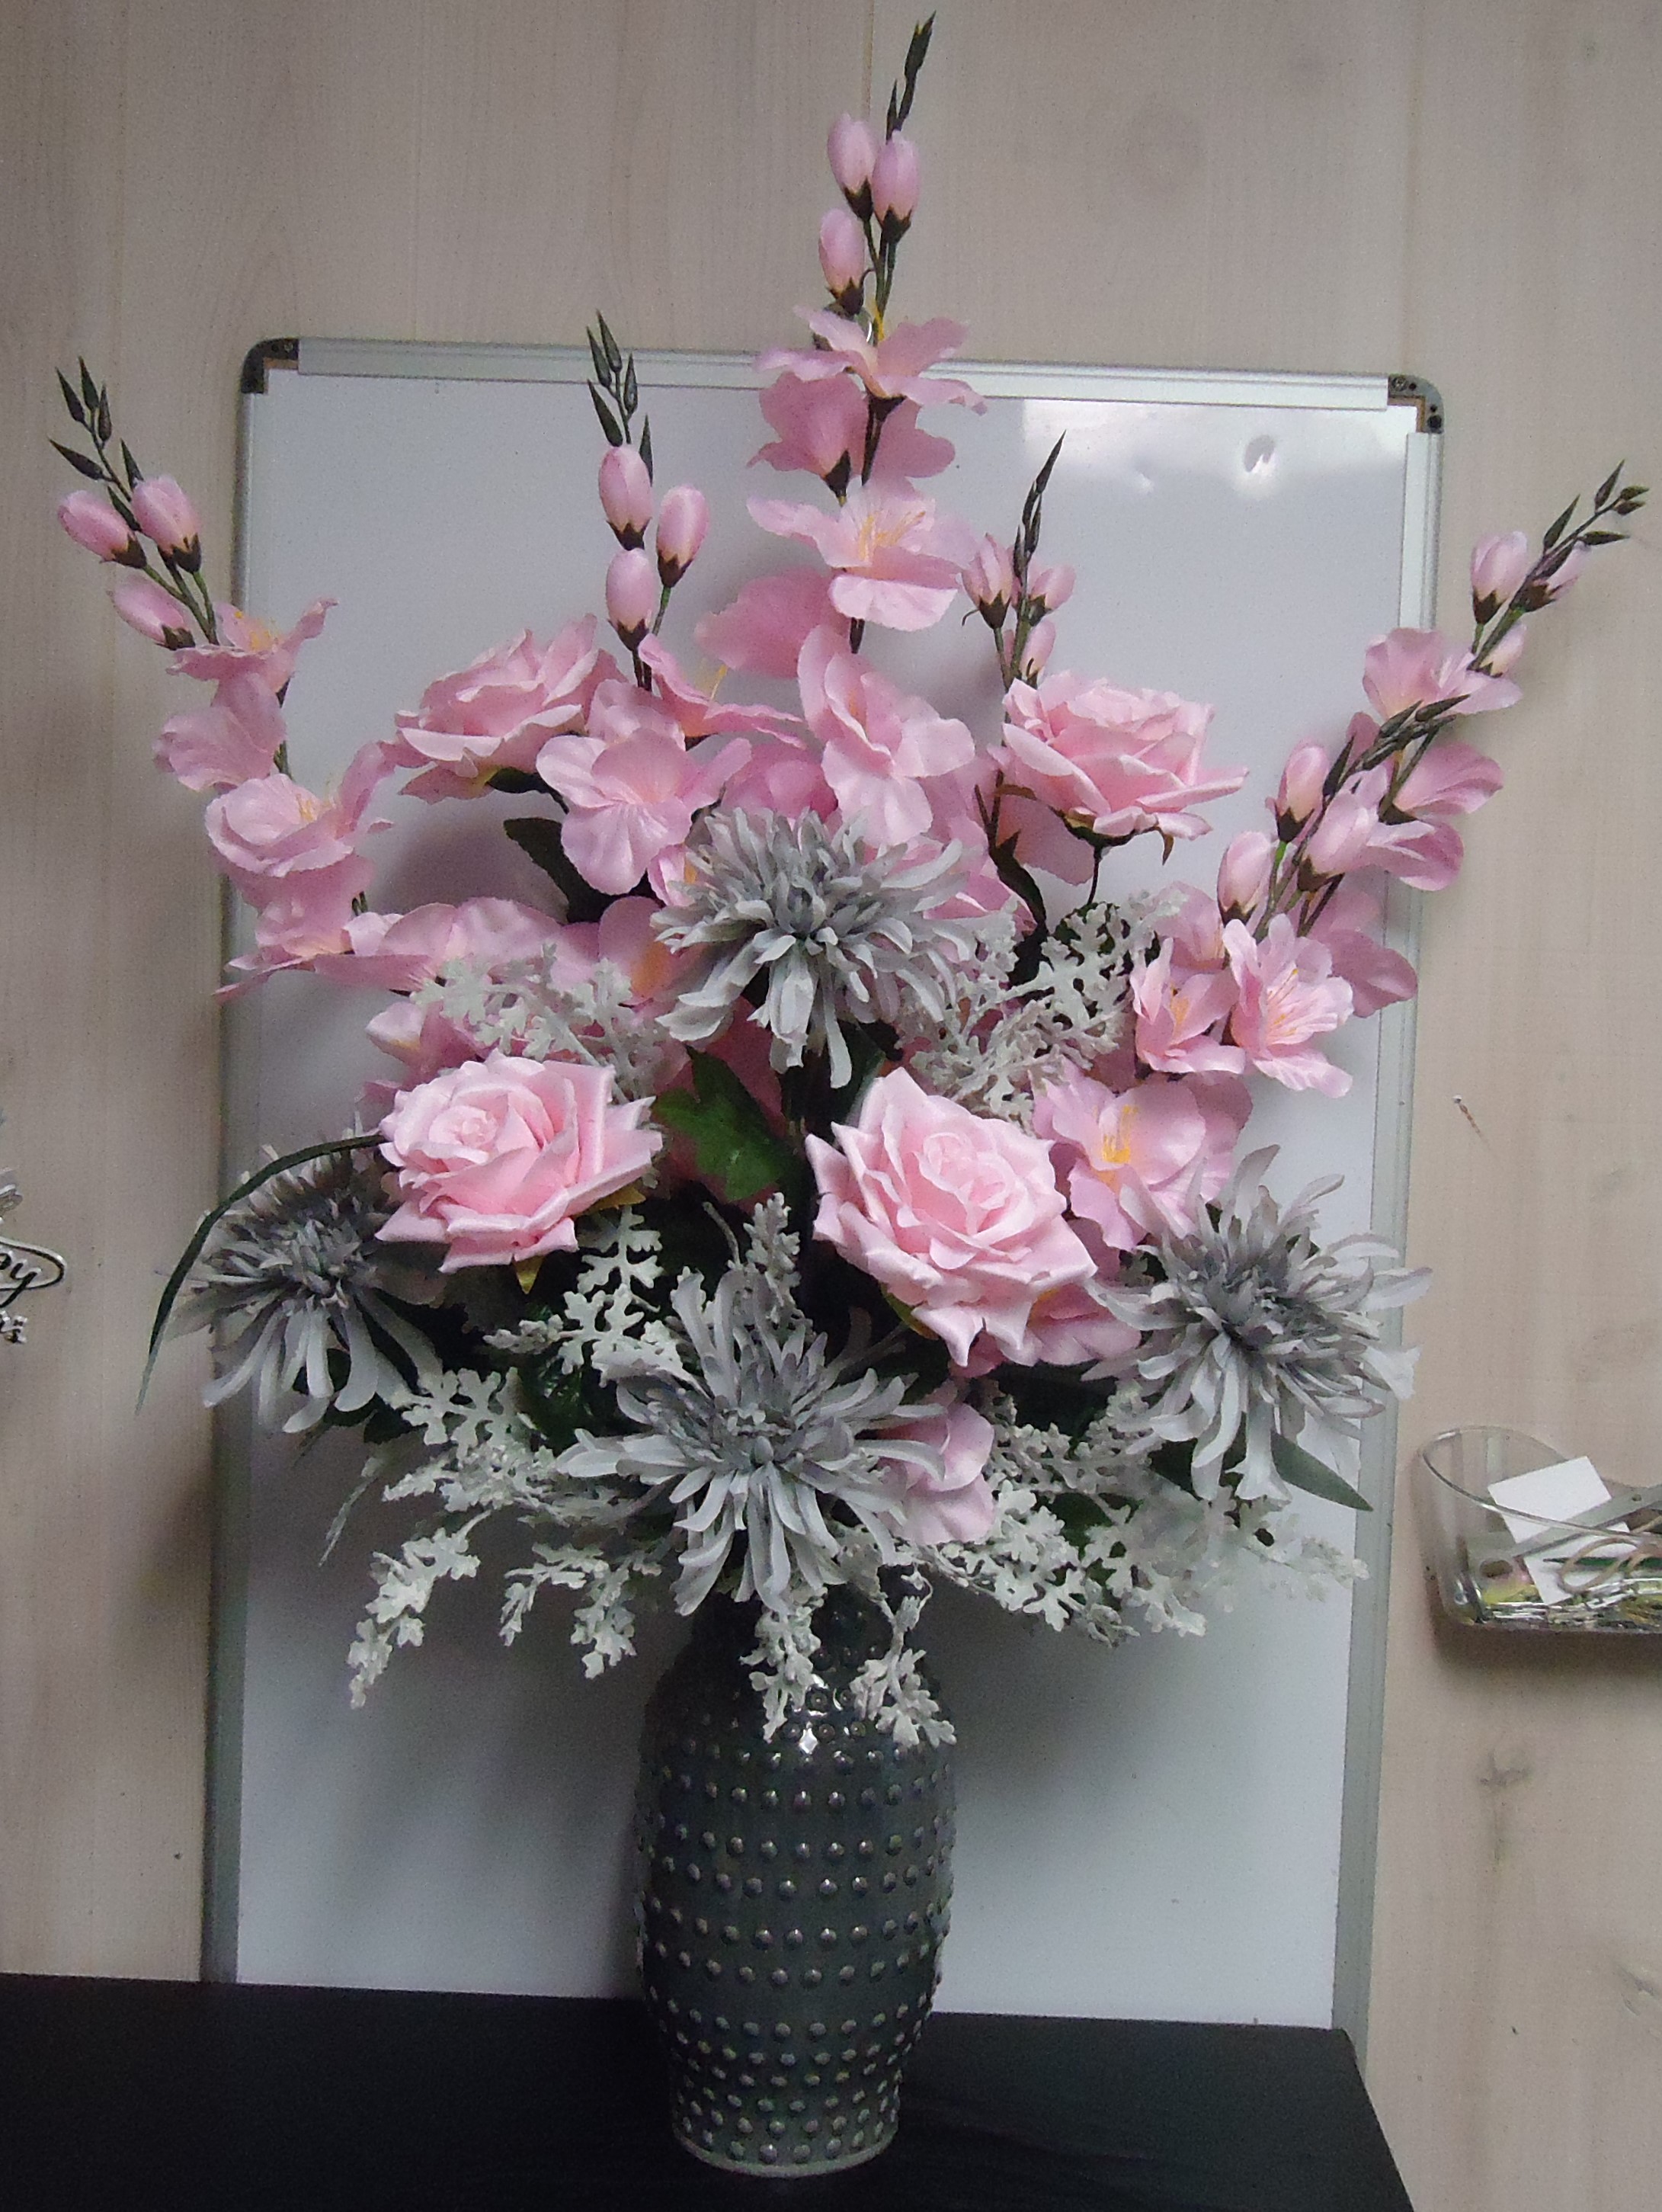 (9) "Silk" Vase Arrangement
(Pink & Gray Mix)
$85.00